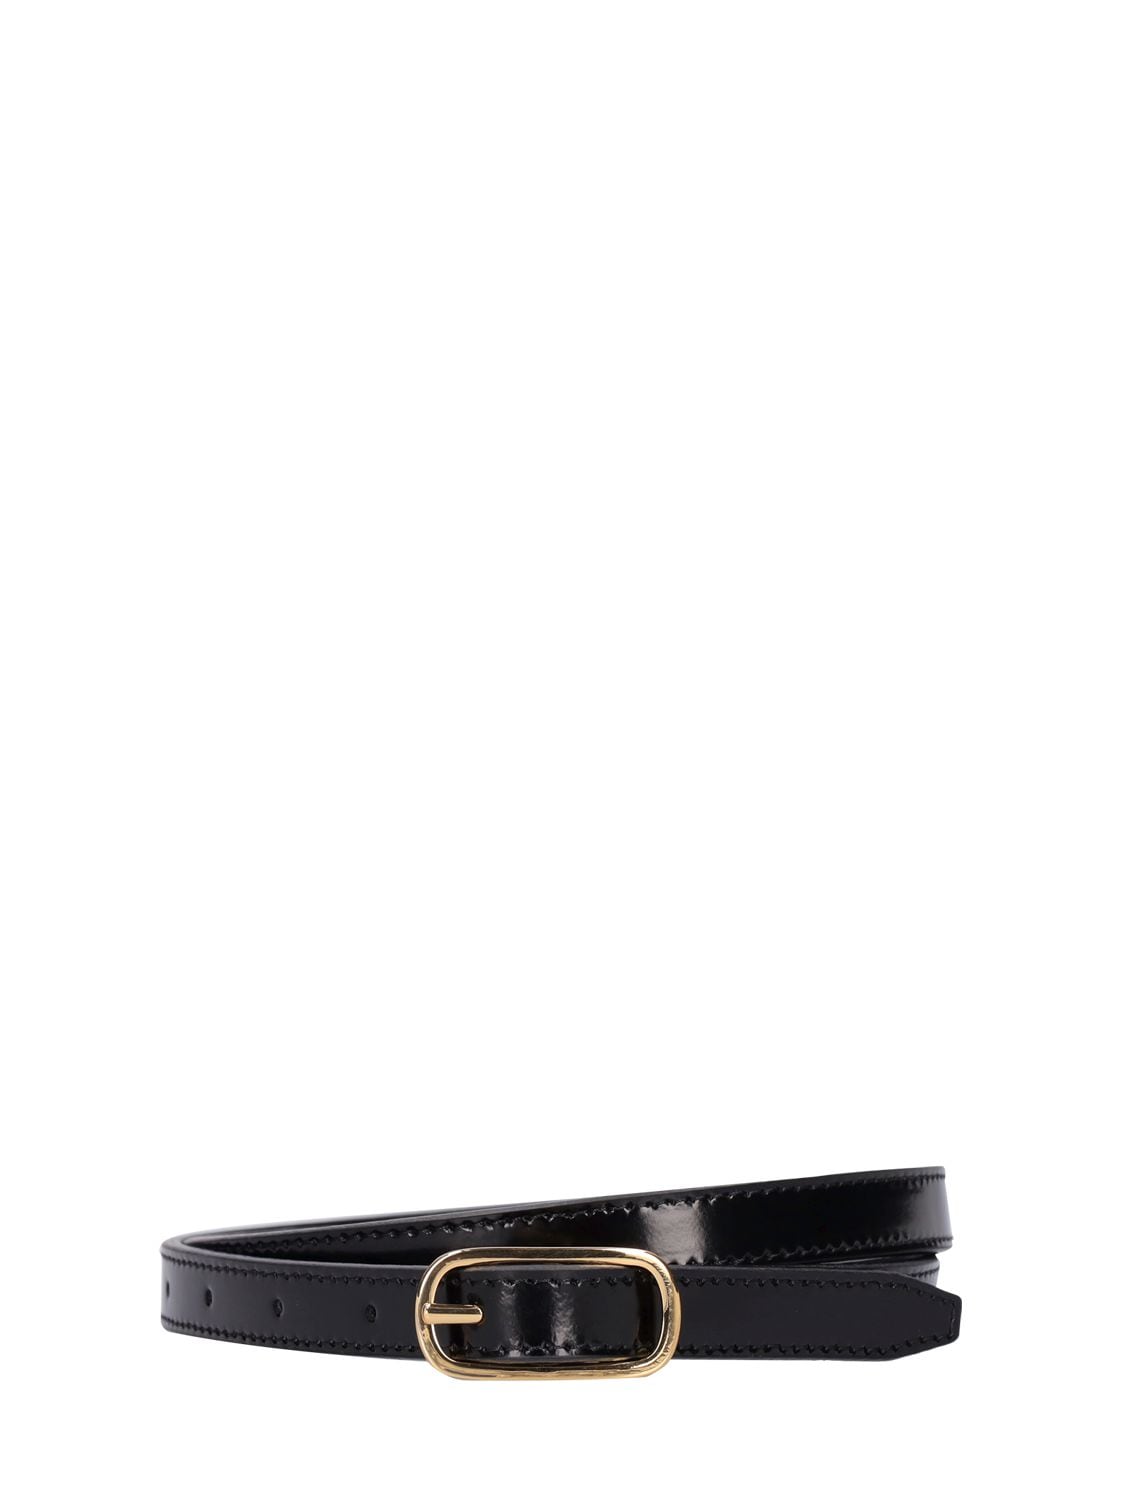 1.5cm Slim Leather Belt W/ Oval Buckle